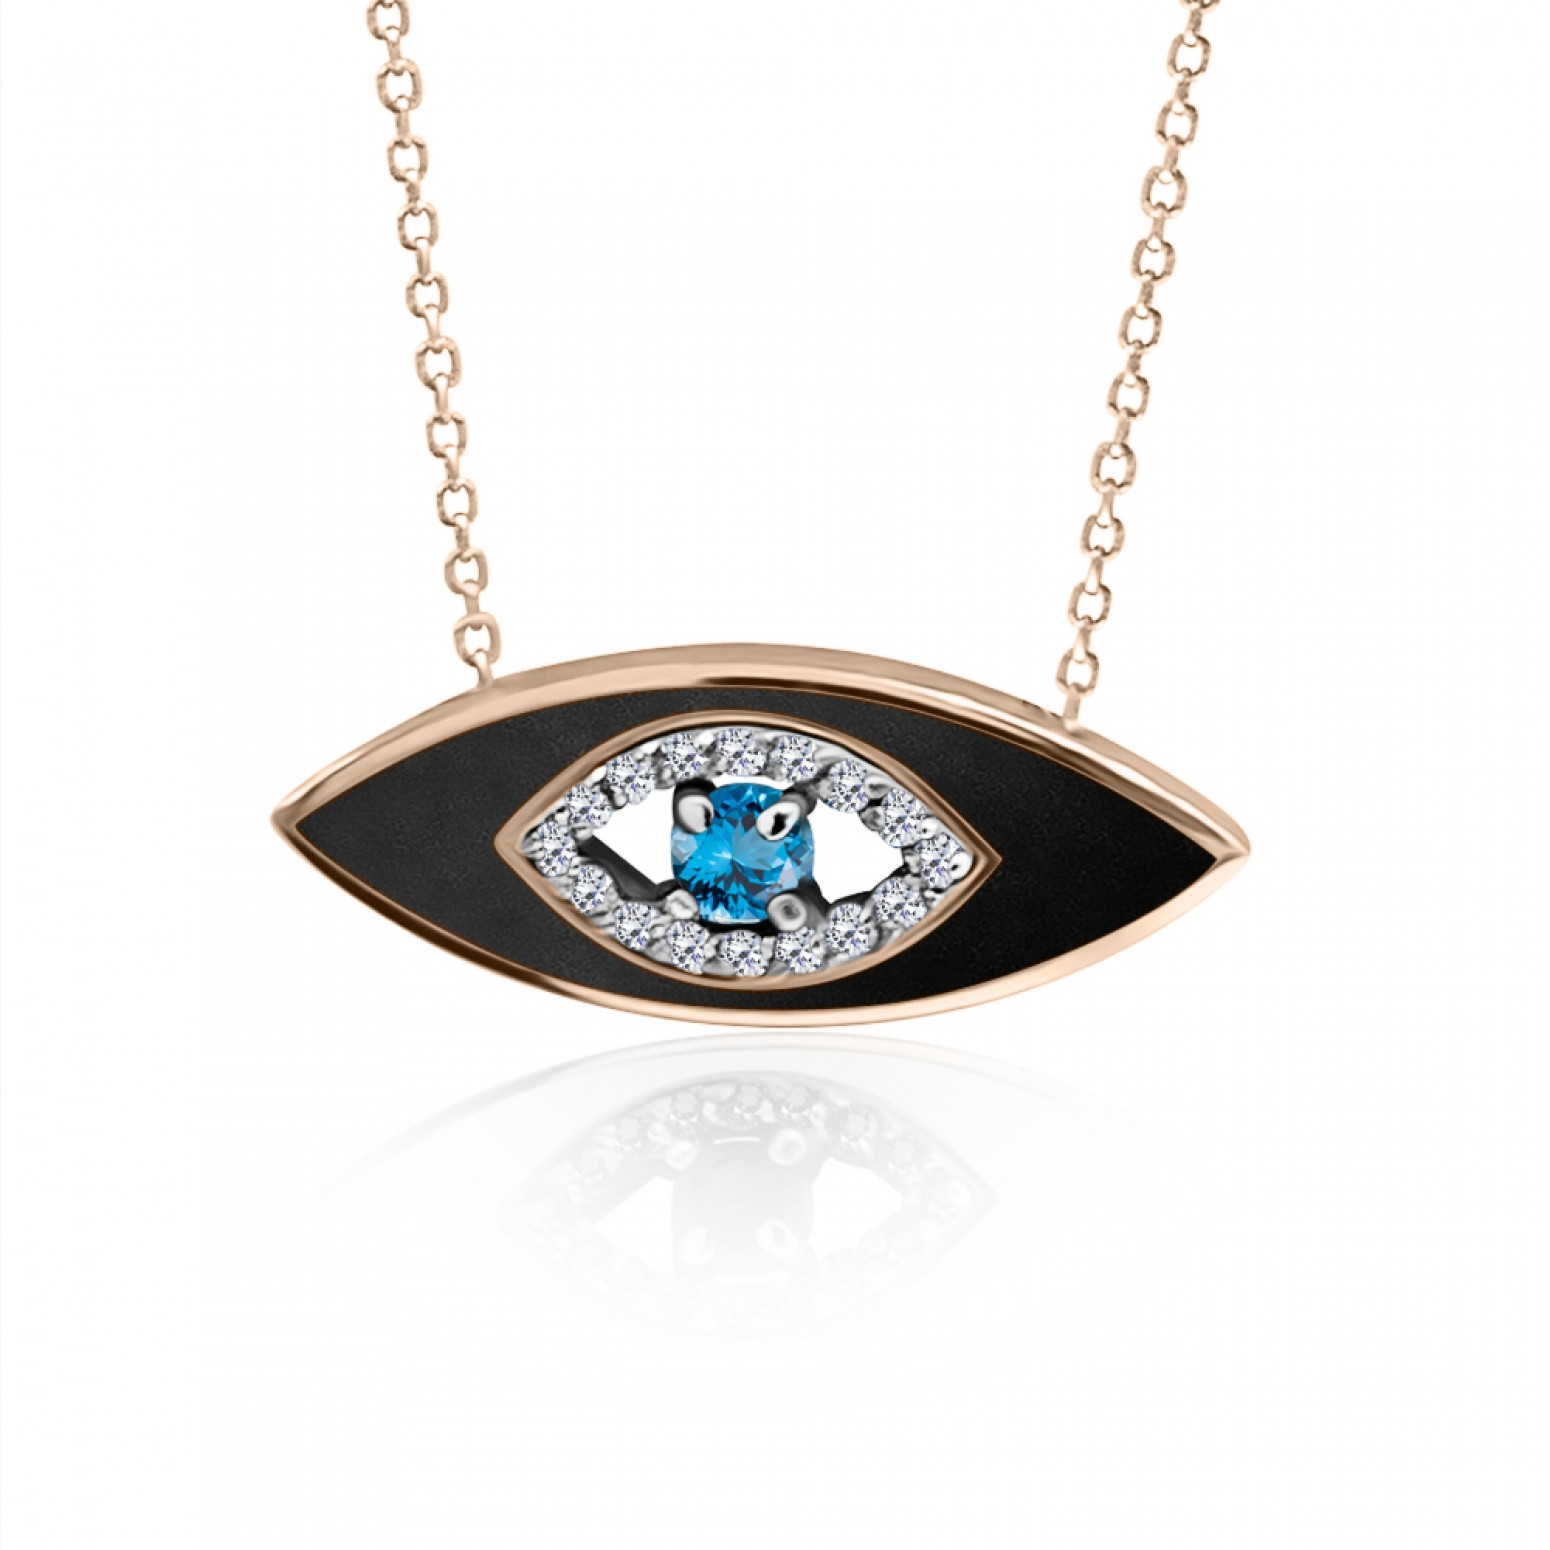 Eye necklace, Κ9 pink gold with blue, white zircon and enamel, ko5023 NECKLACES Κοσμηματα - chrilia.gr